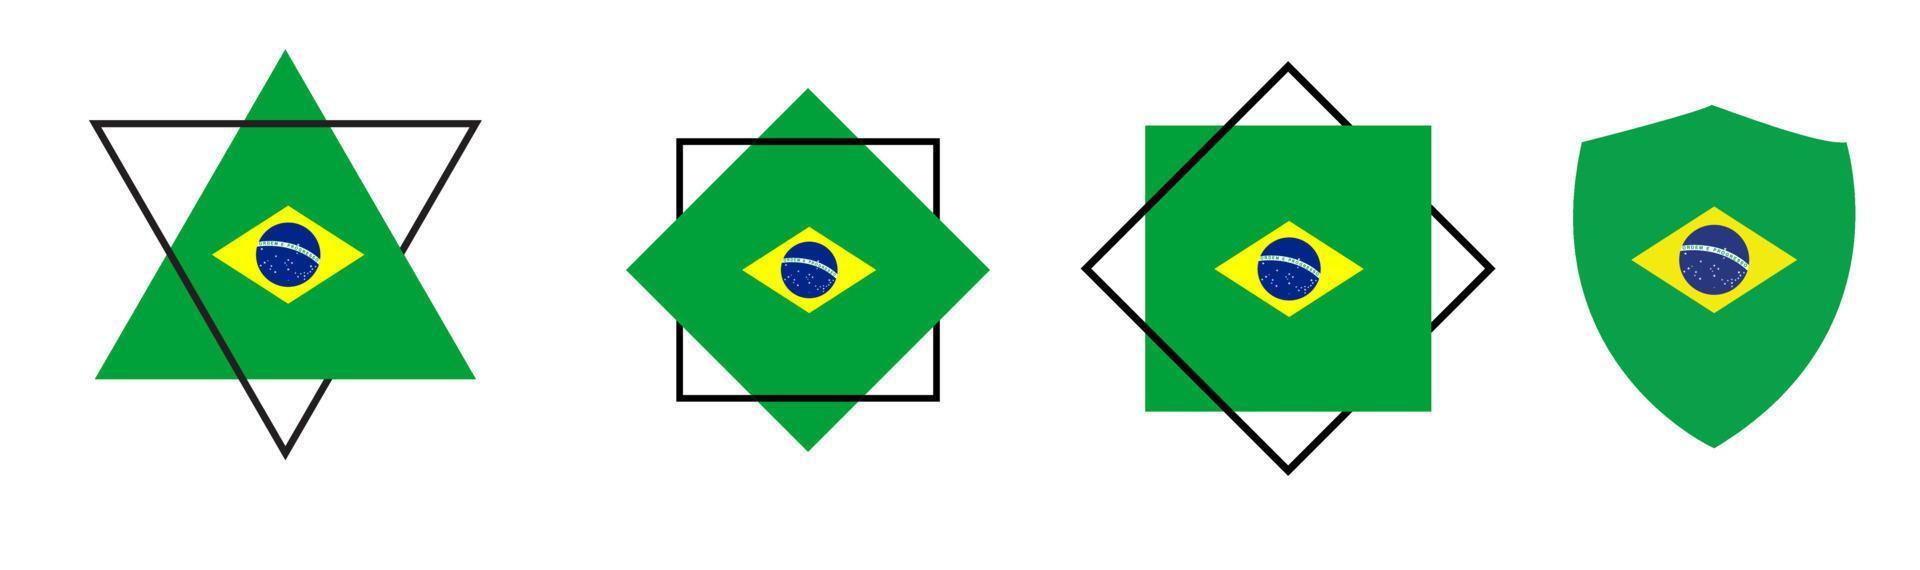 braziliaanse vlag. vectorillustratie. Brazilië nationale vlag instellen vectorillustratie. illustratie van de vlag van brazilië. brazilië officiële nationale vlag. vector